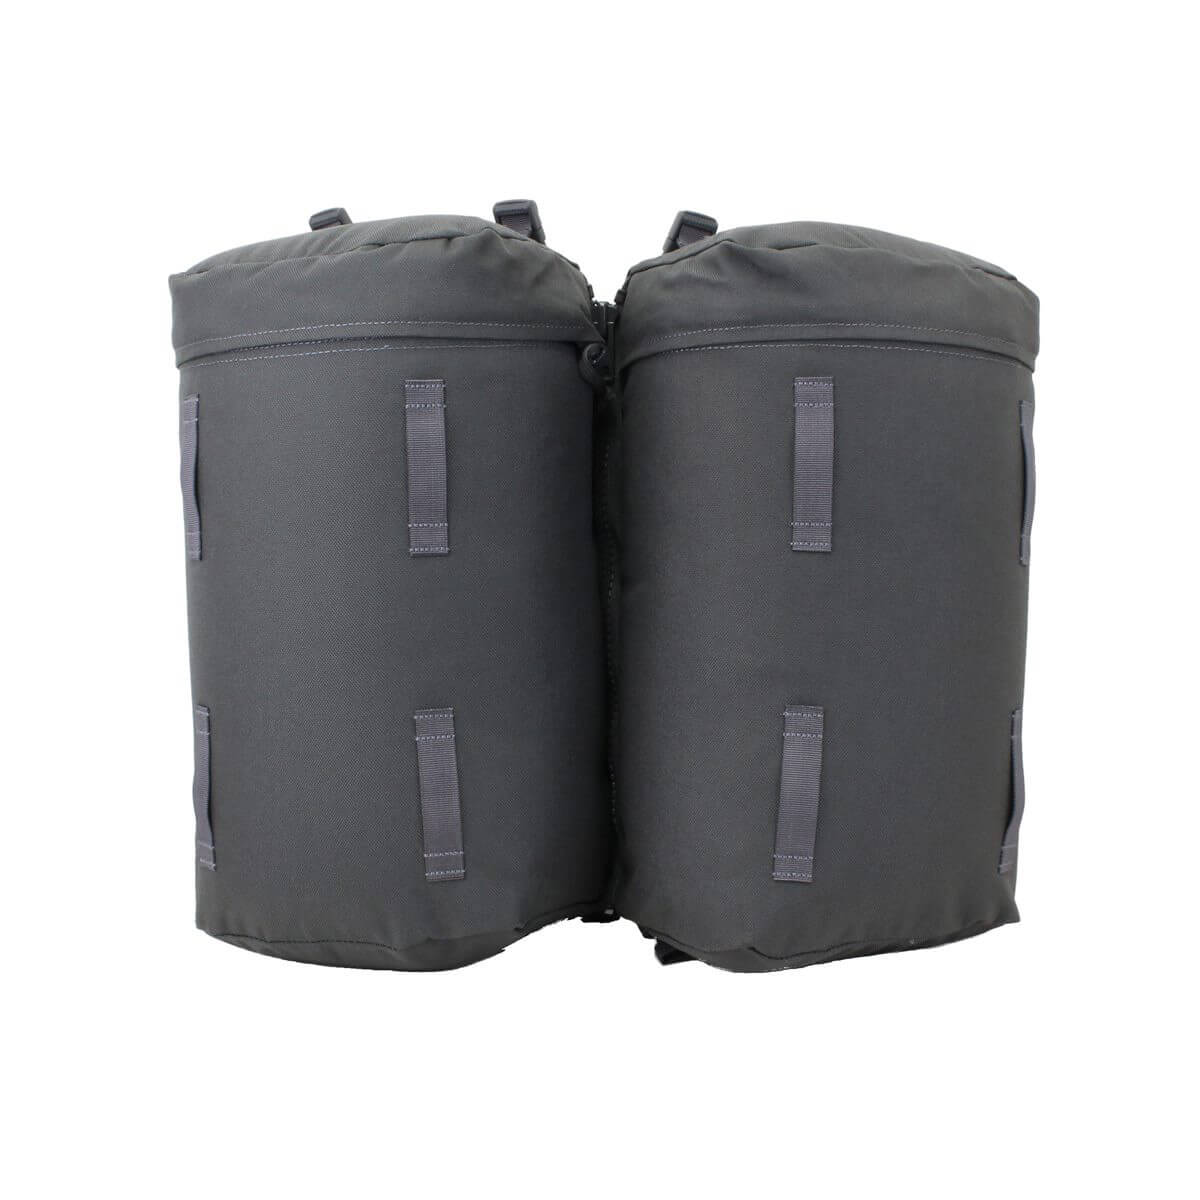 Karrimor SF Sabre PLCE Side Pockets (Pair) - John Bull Clothing